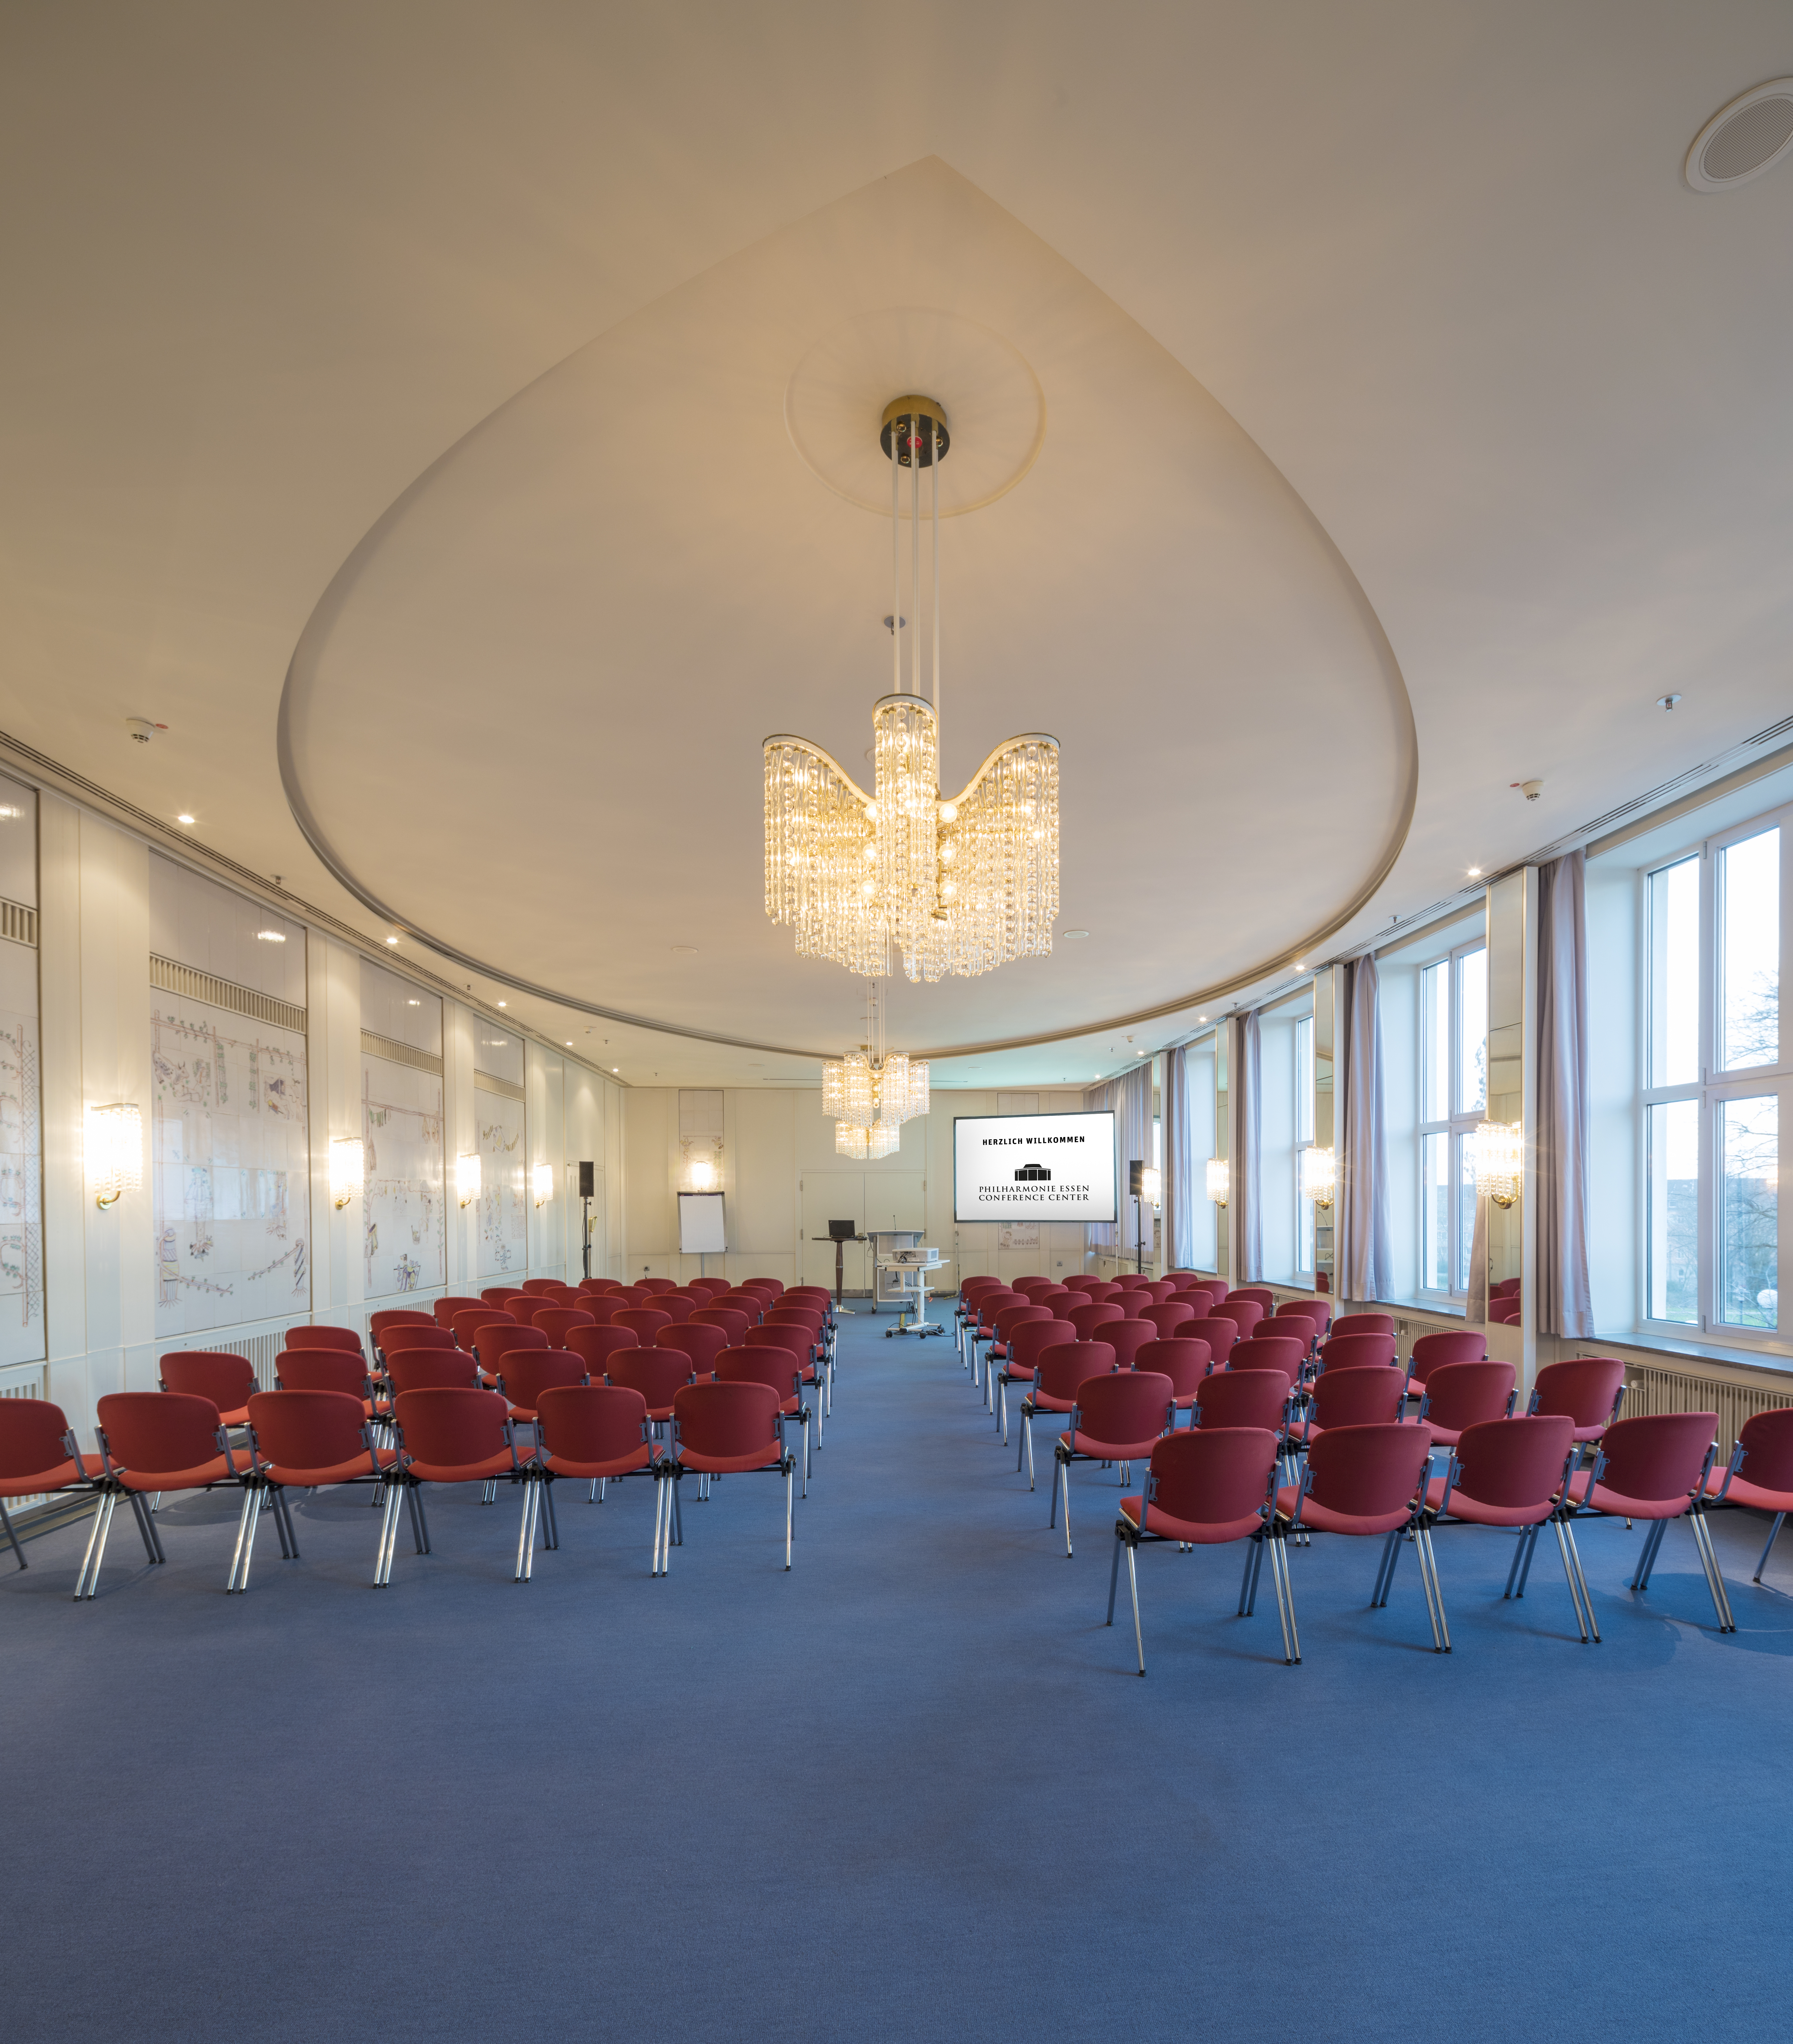 Philharmonie Essen Conference Center - Image 7